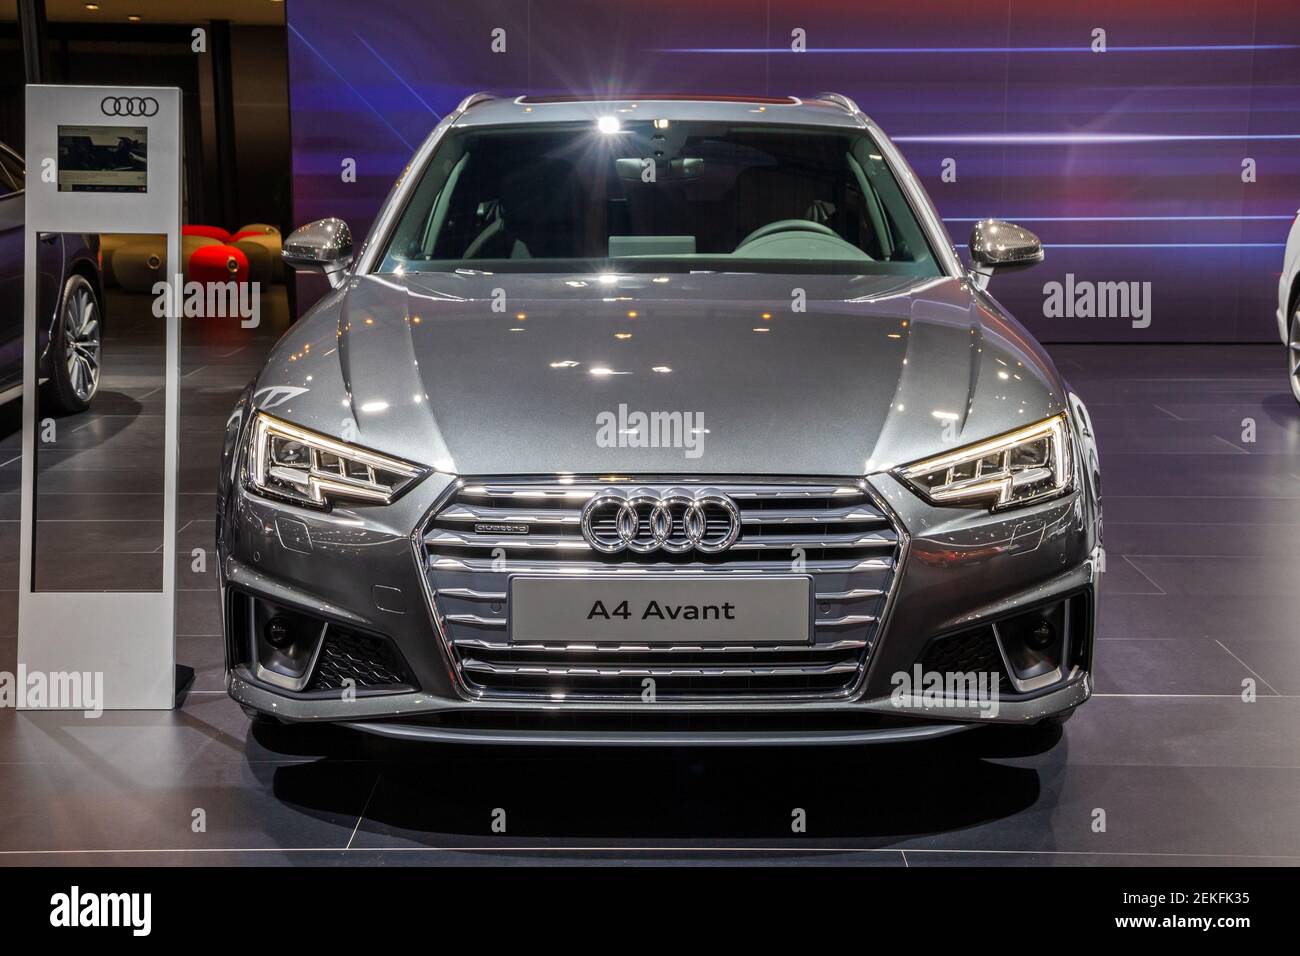 Audi A4 Avant car showcased at the Brussels Autosalon Motor Show. Belgium - January 18, 2019. Stock Photo